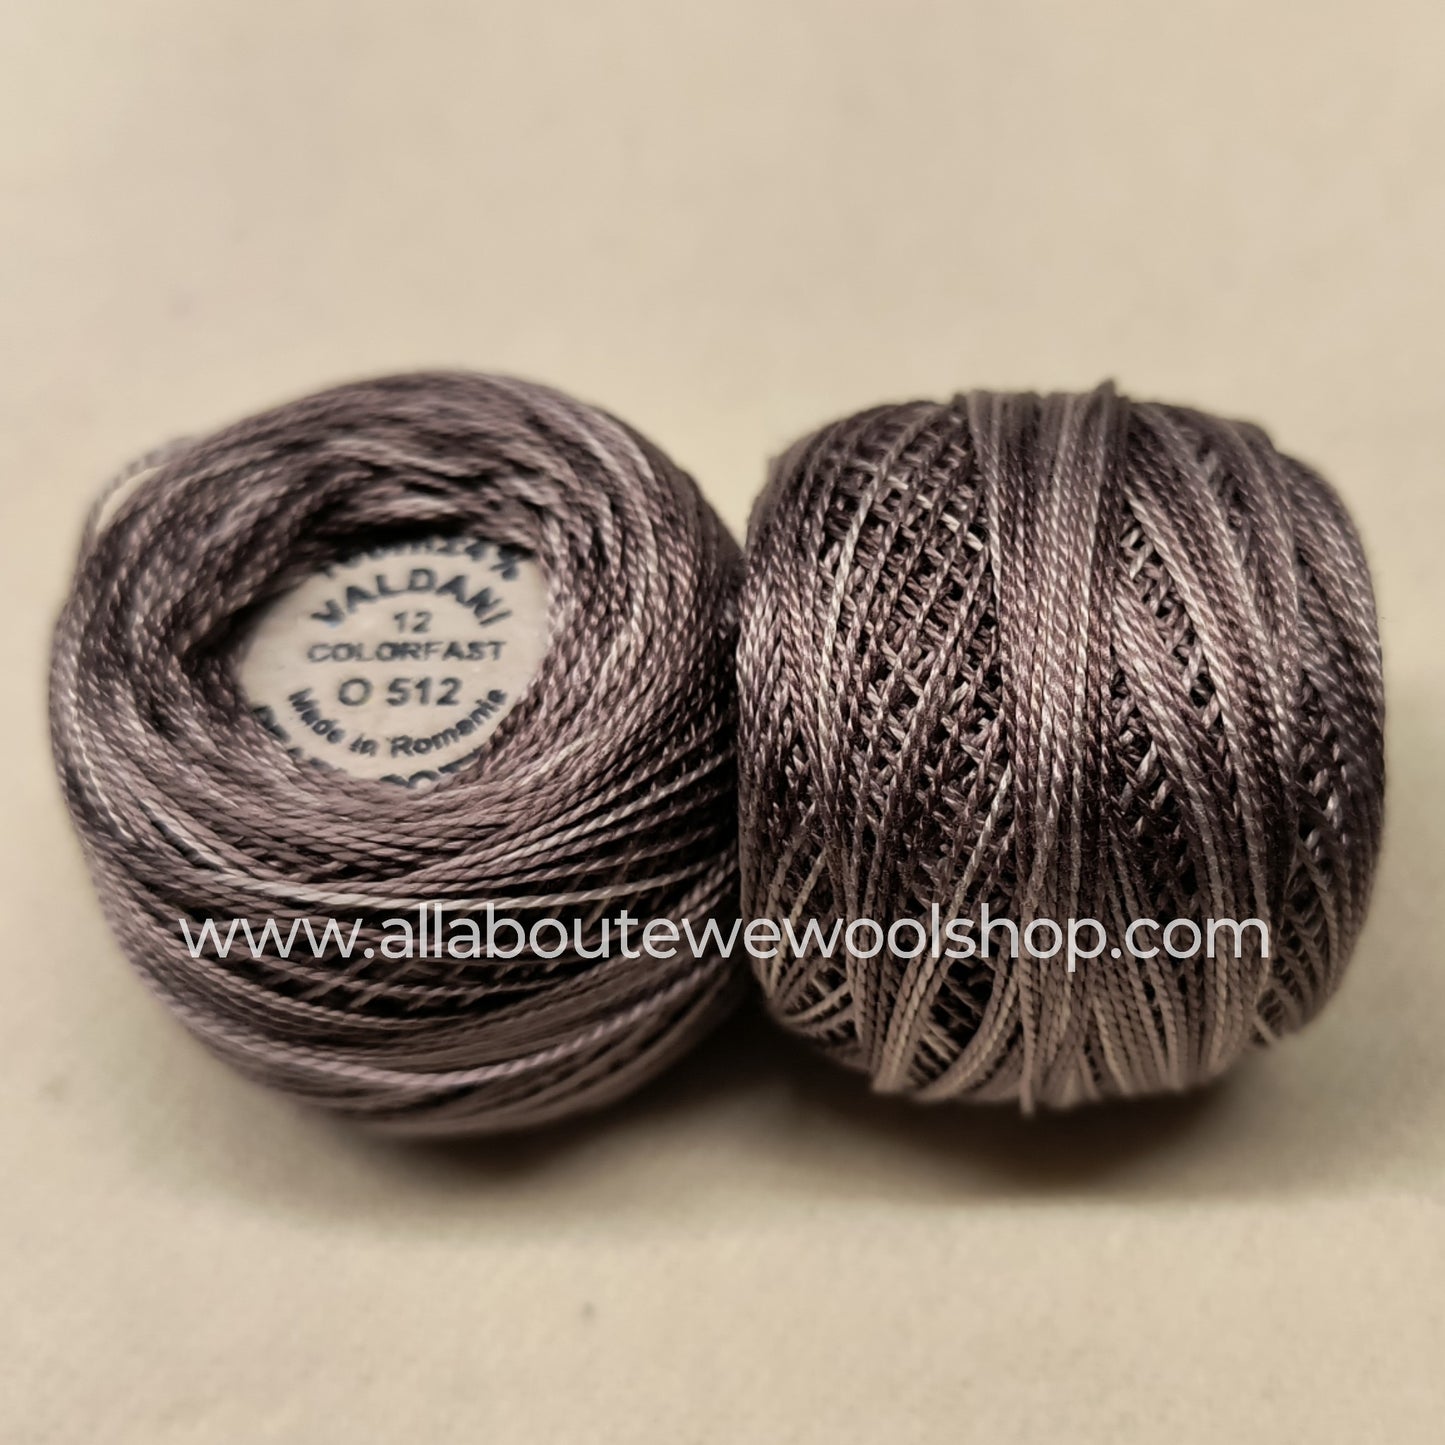 O512 #12 Valdani Perle Cotton Thread